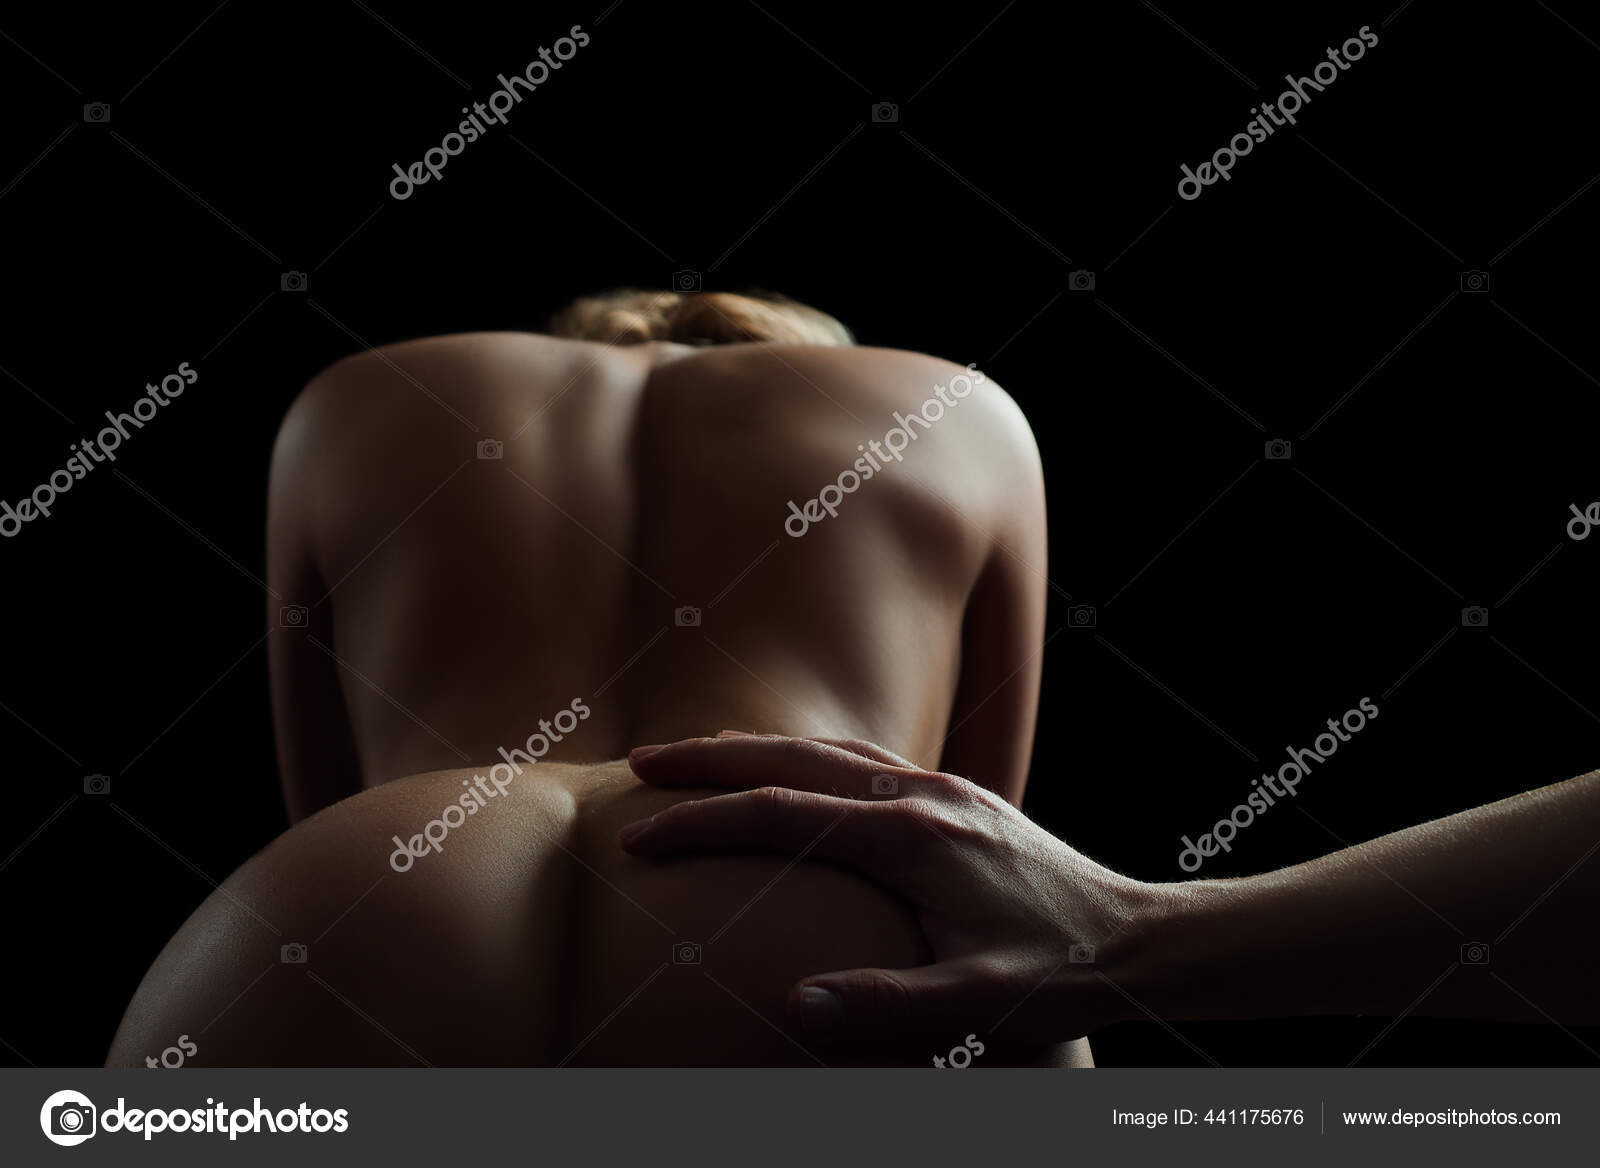 Couple having sex. Naked ass. Female buttocks butt